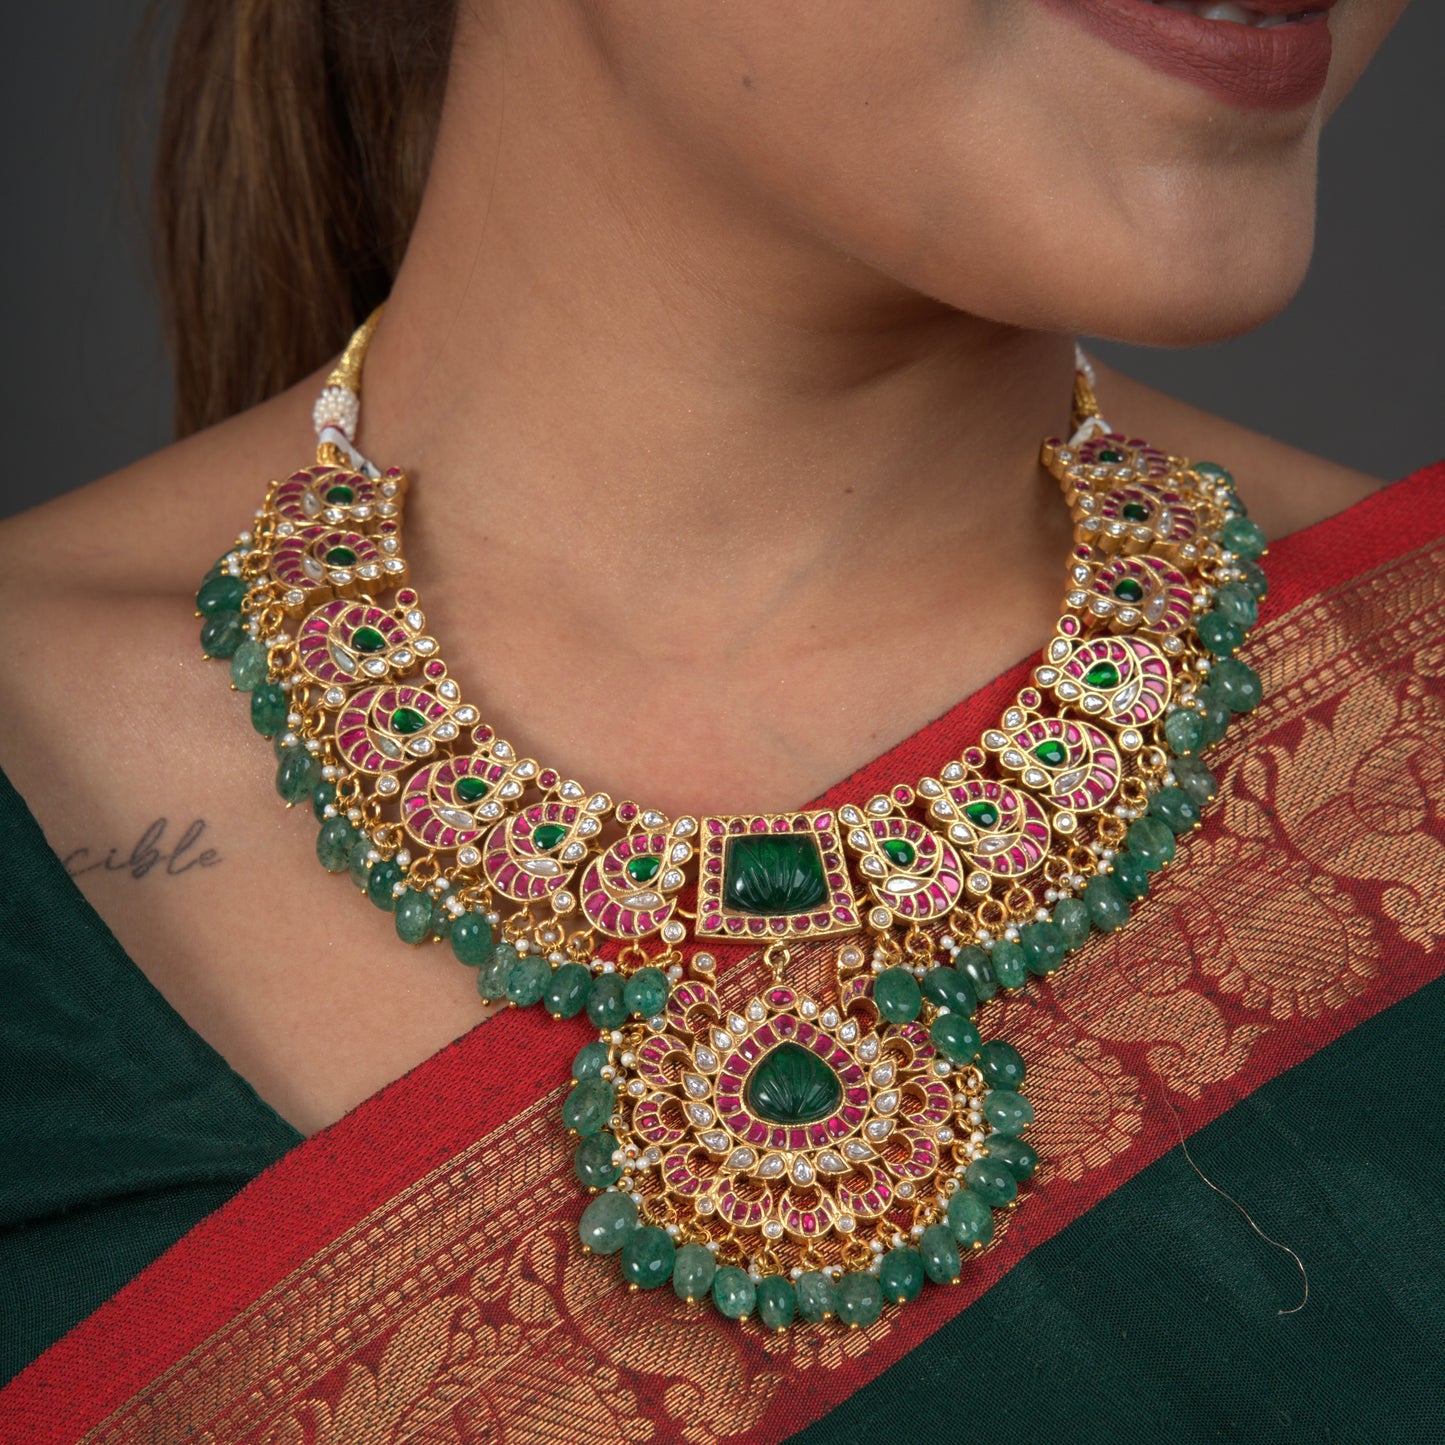 Elegant Jadau Kundan Necklace with Emerald Bead Accents with 22k gold plating This product belongs to Jadau Kundan jewellery category 